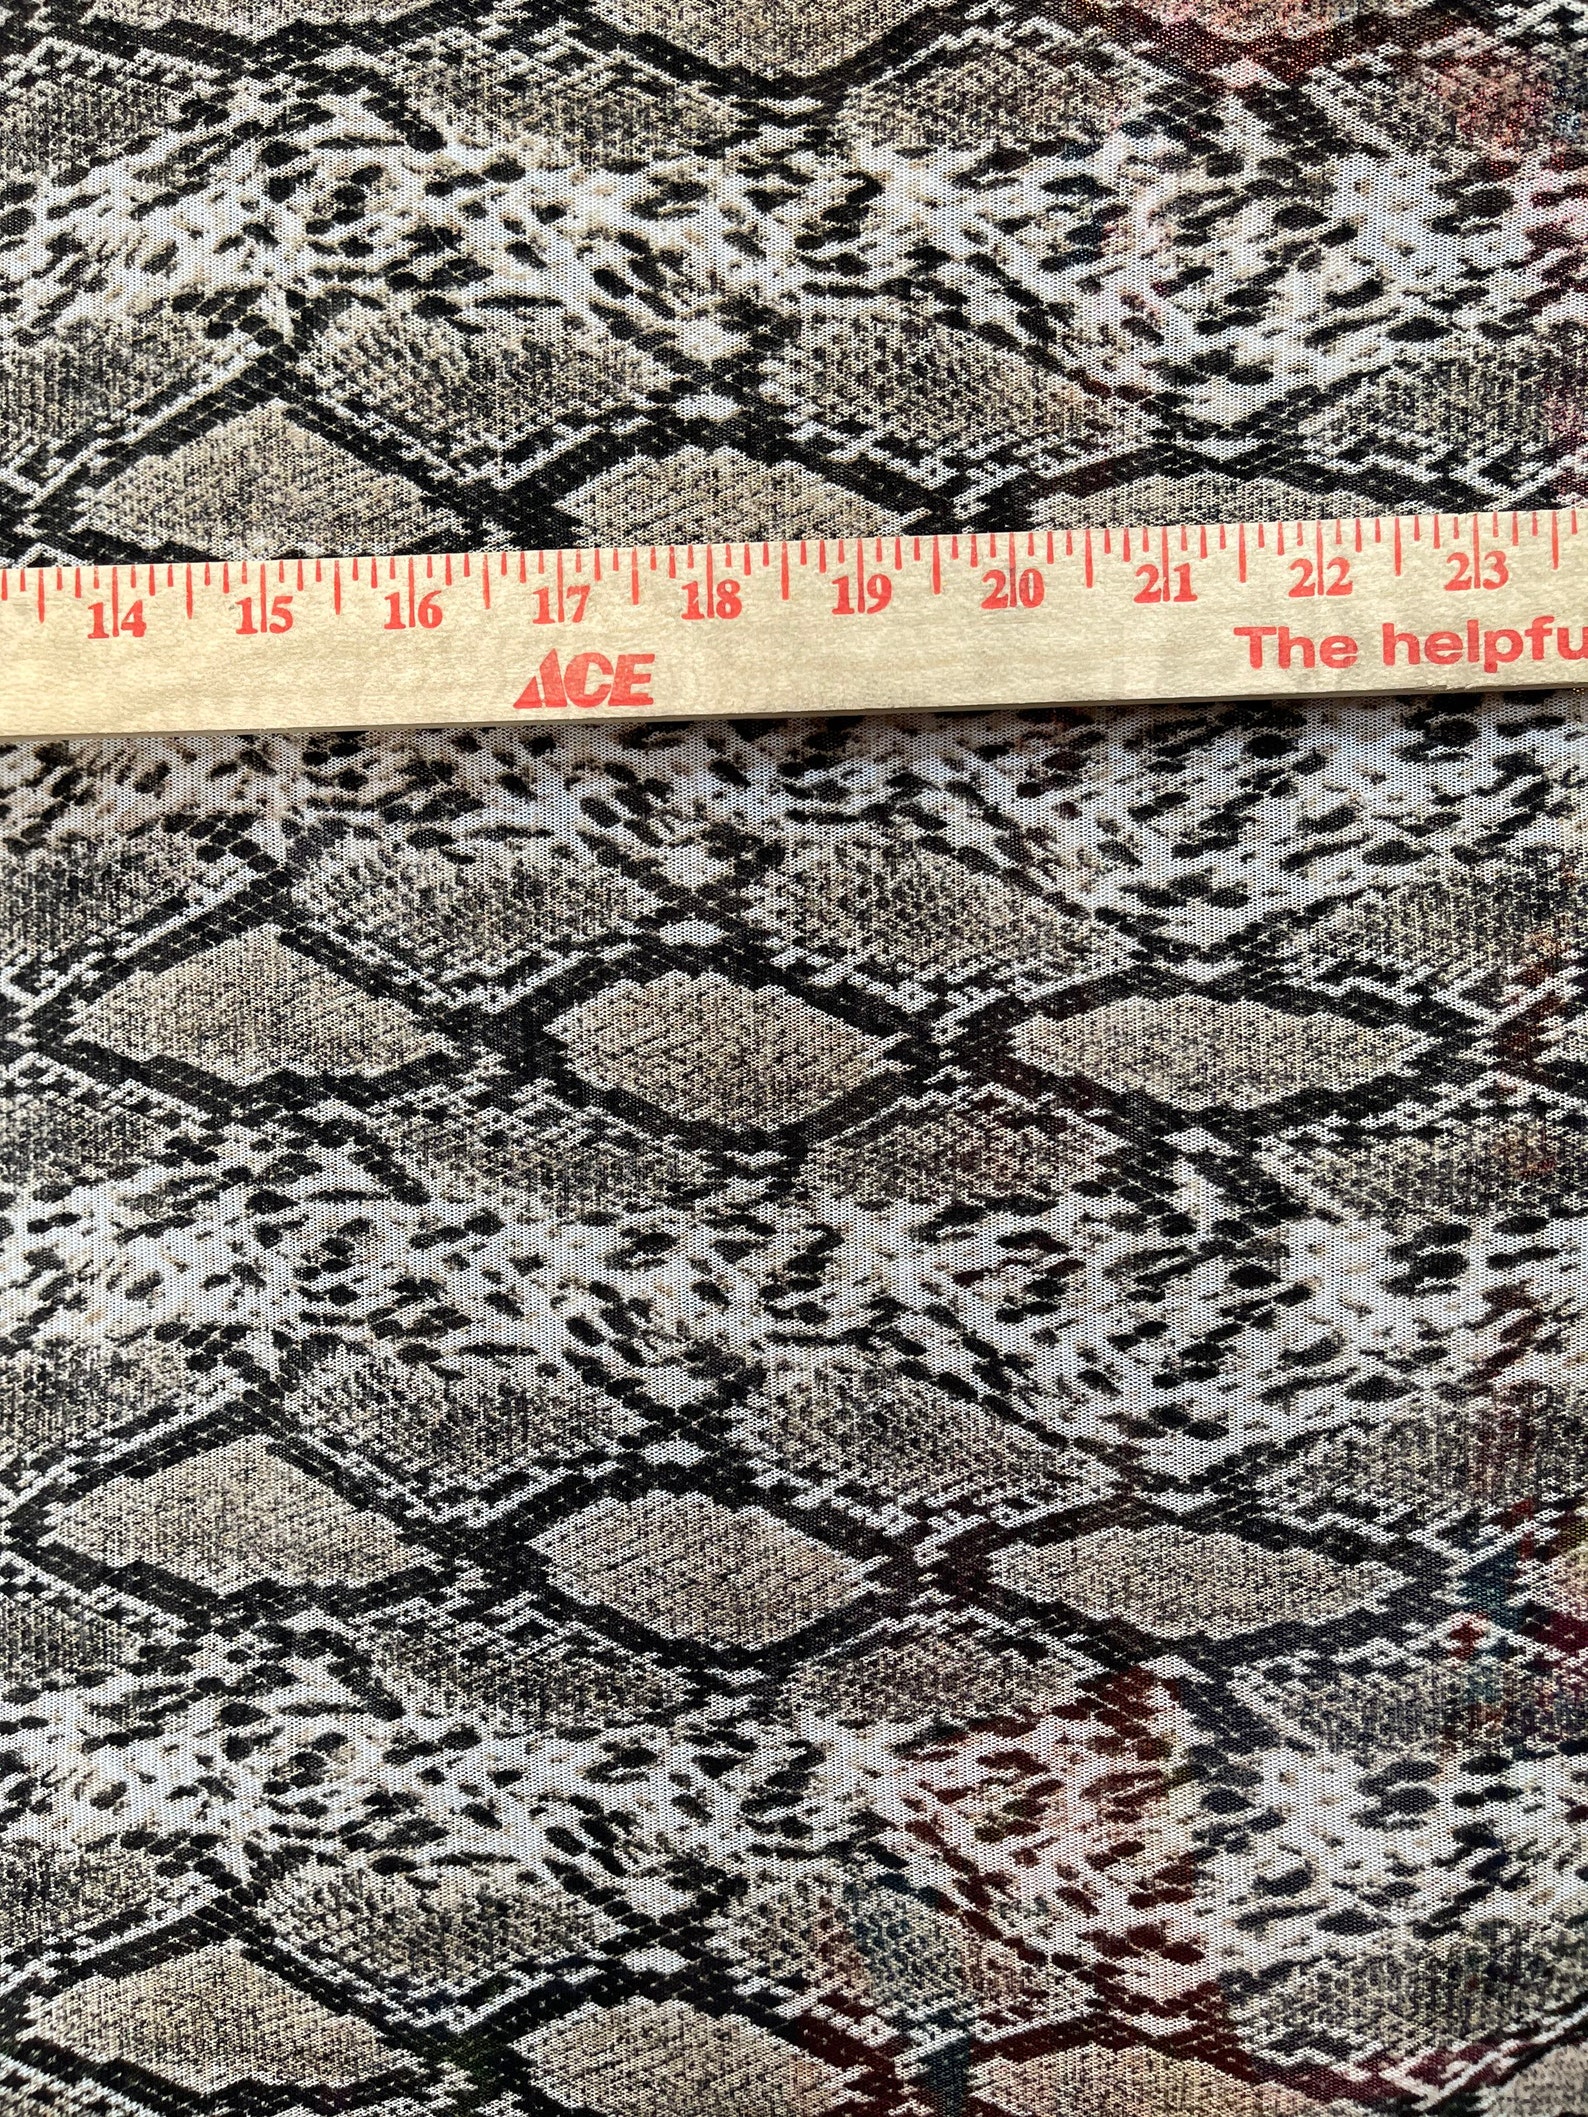 Snake Print MESH Fabric Natural Colors Snake Mesh Fabric Sold - Etsy